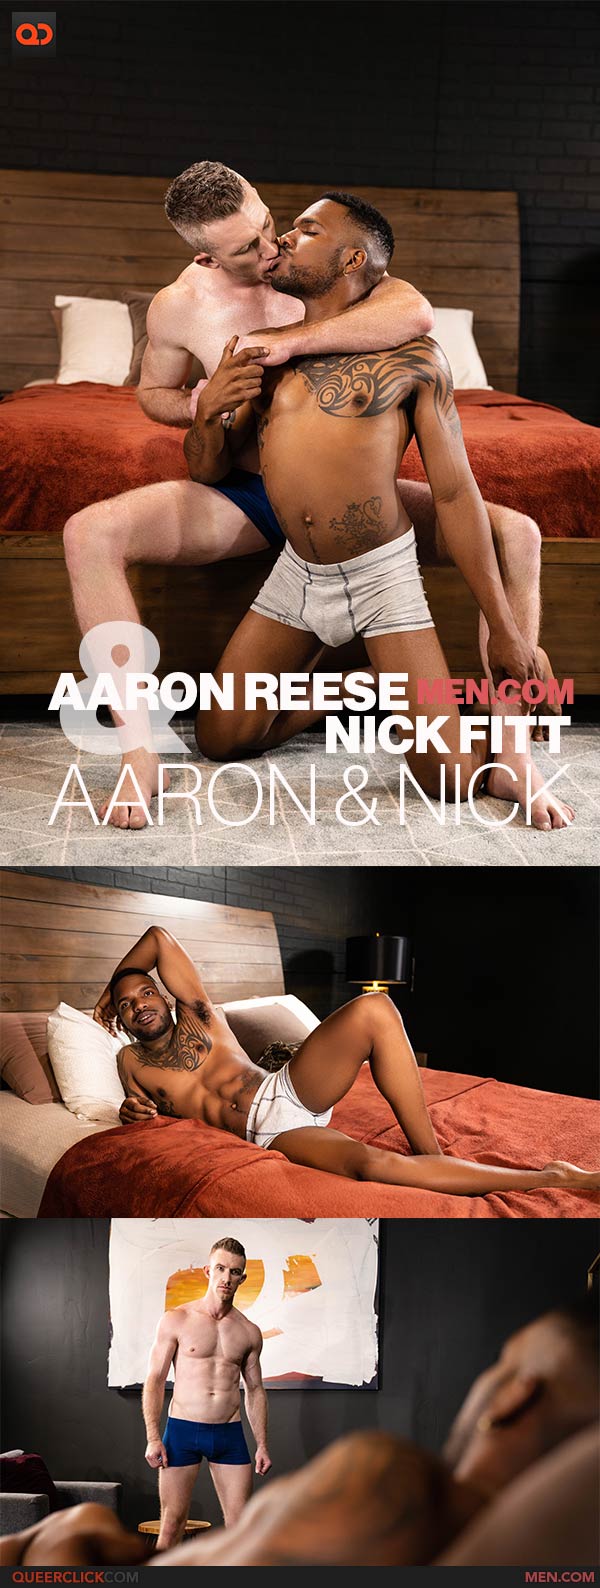 Men.com: Nick Fitt and Aaron Reese